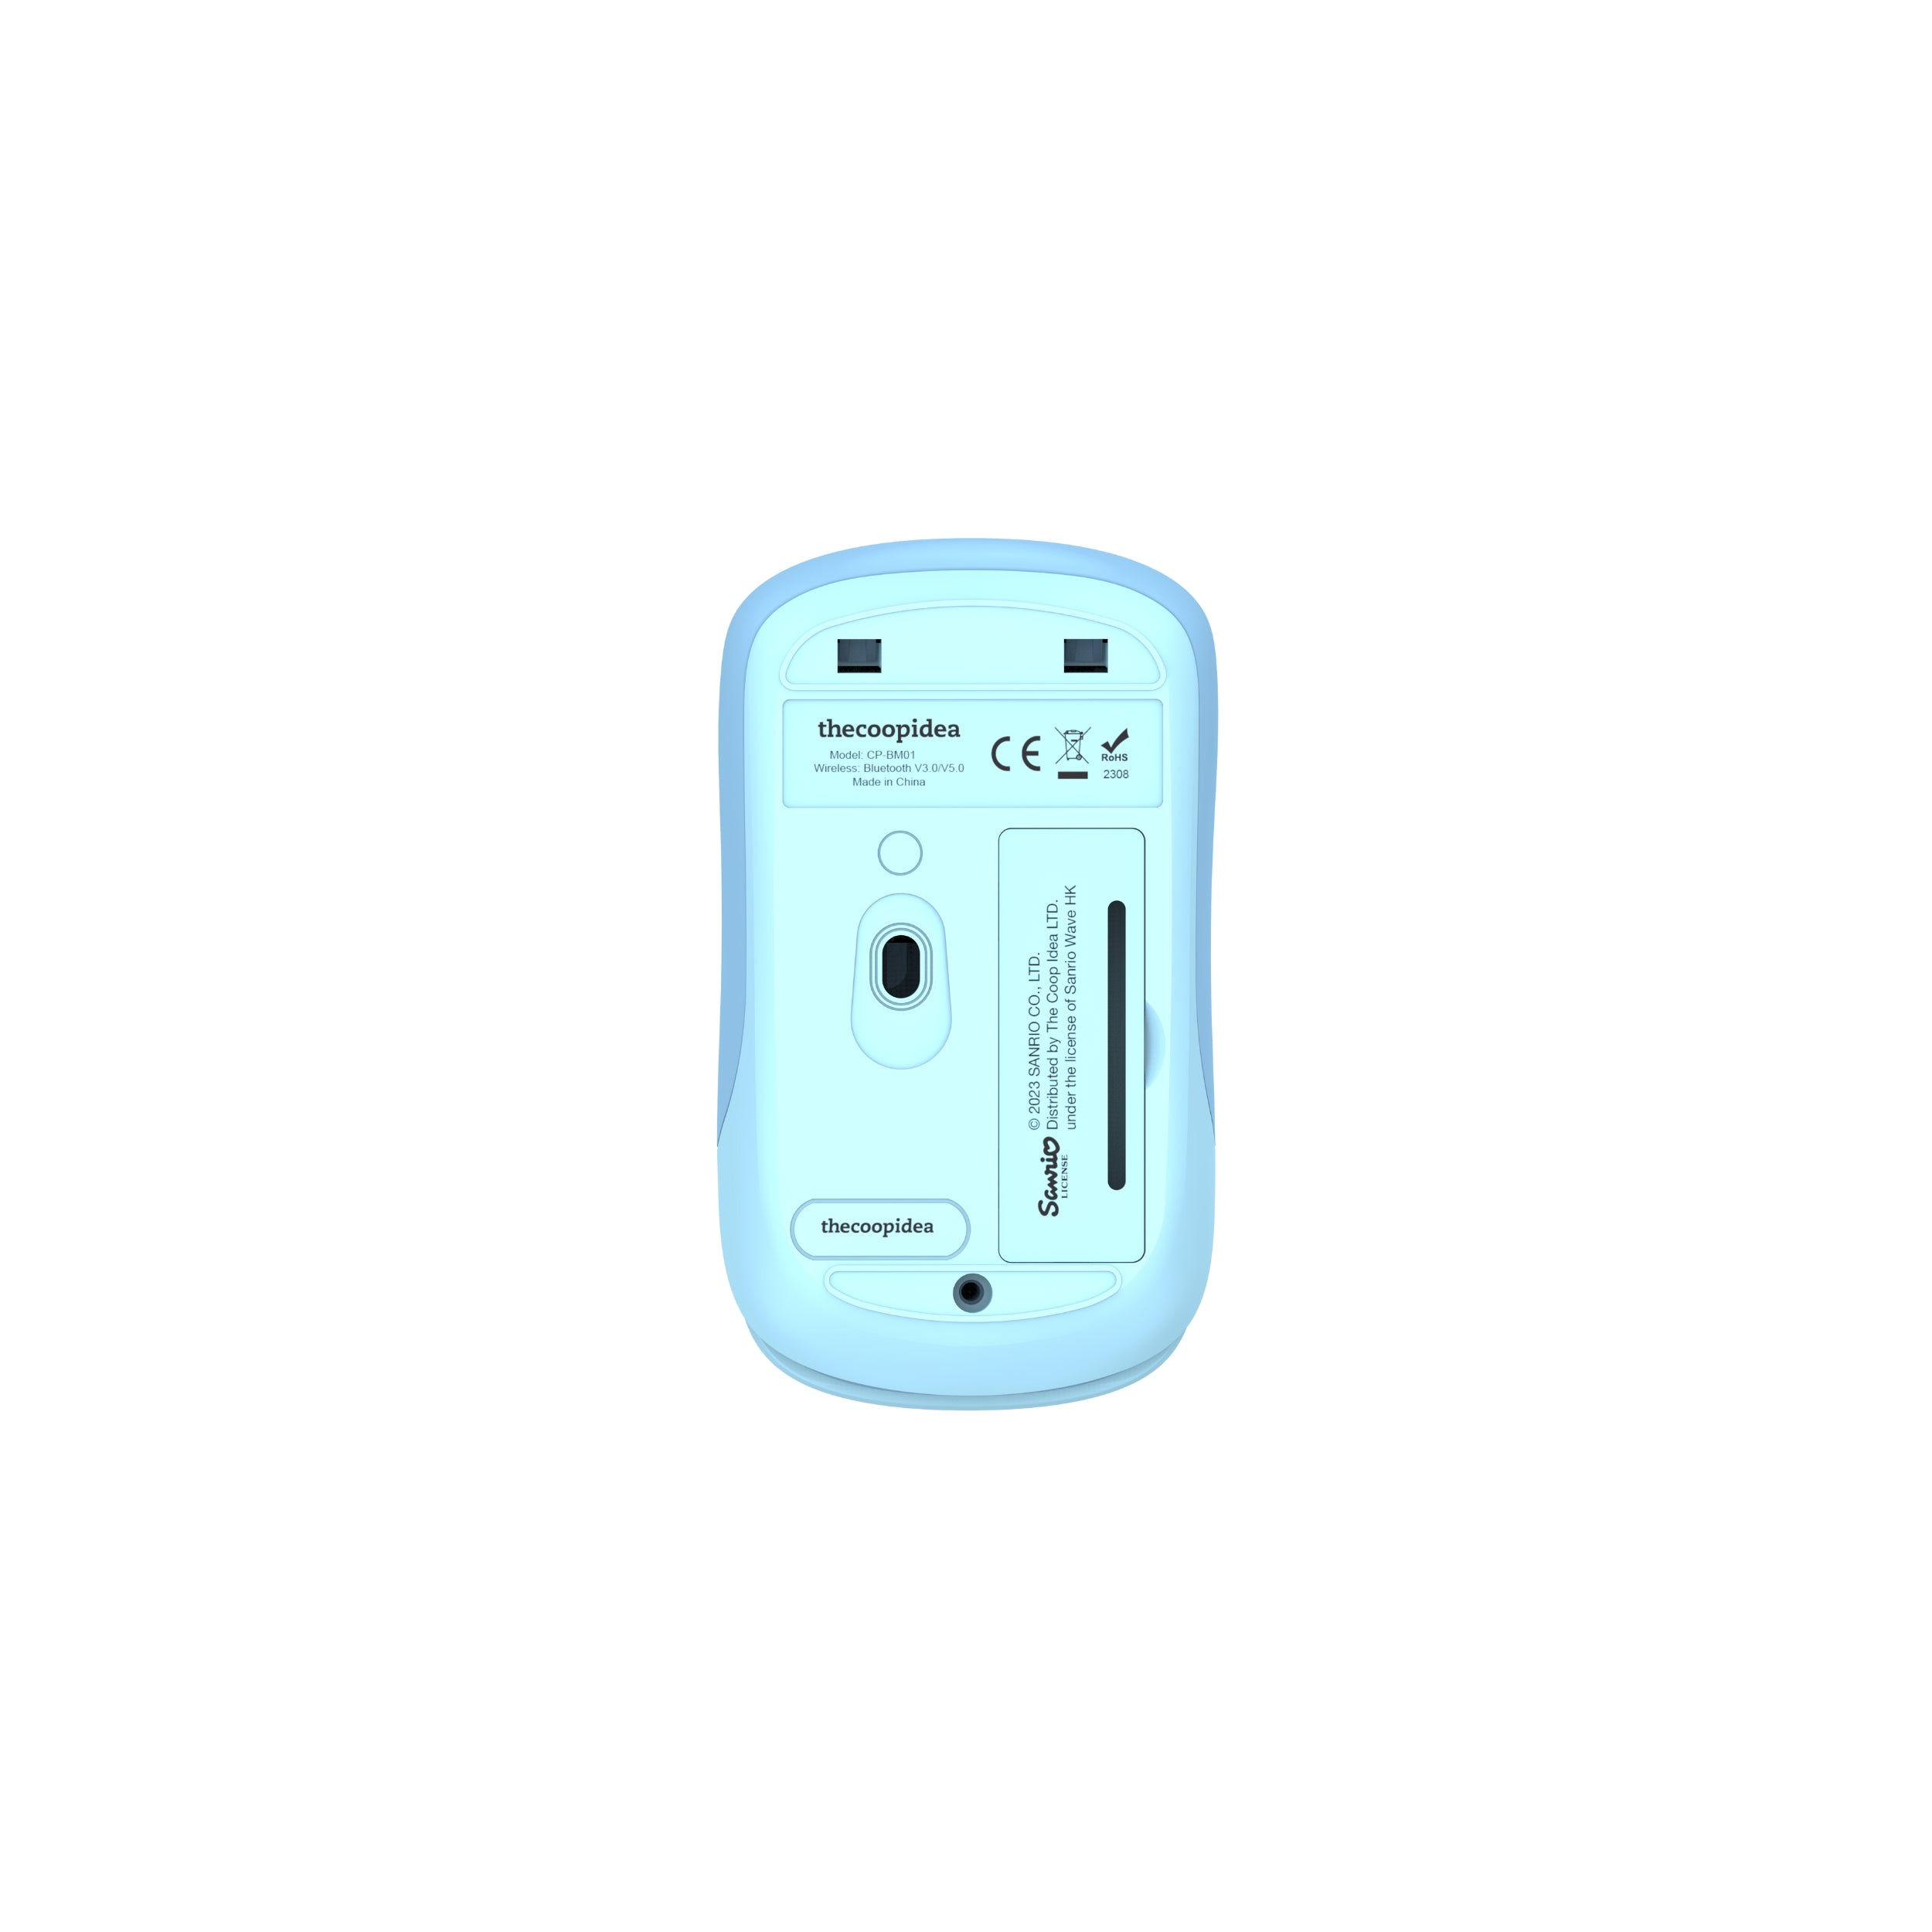 Sanrio CLICKY Bluetooth Mouse - Cinnamoroll